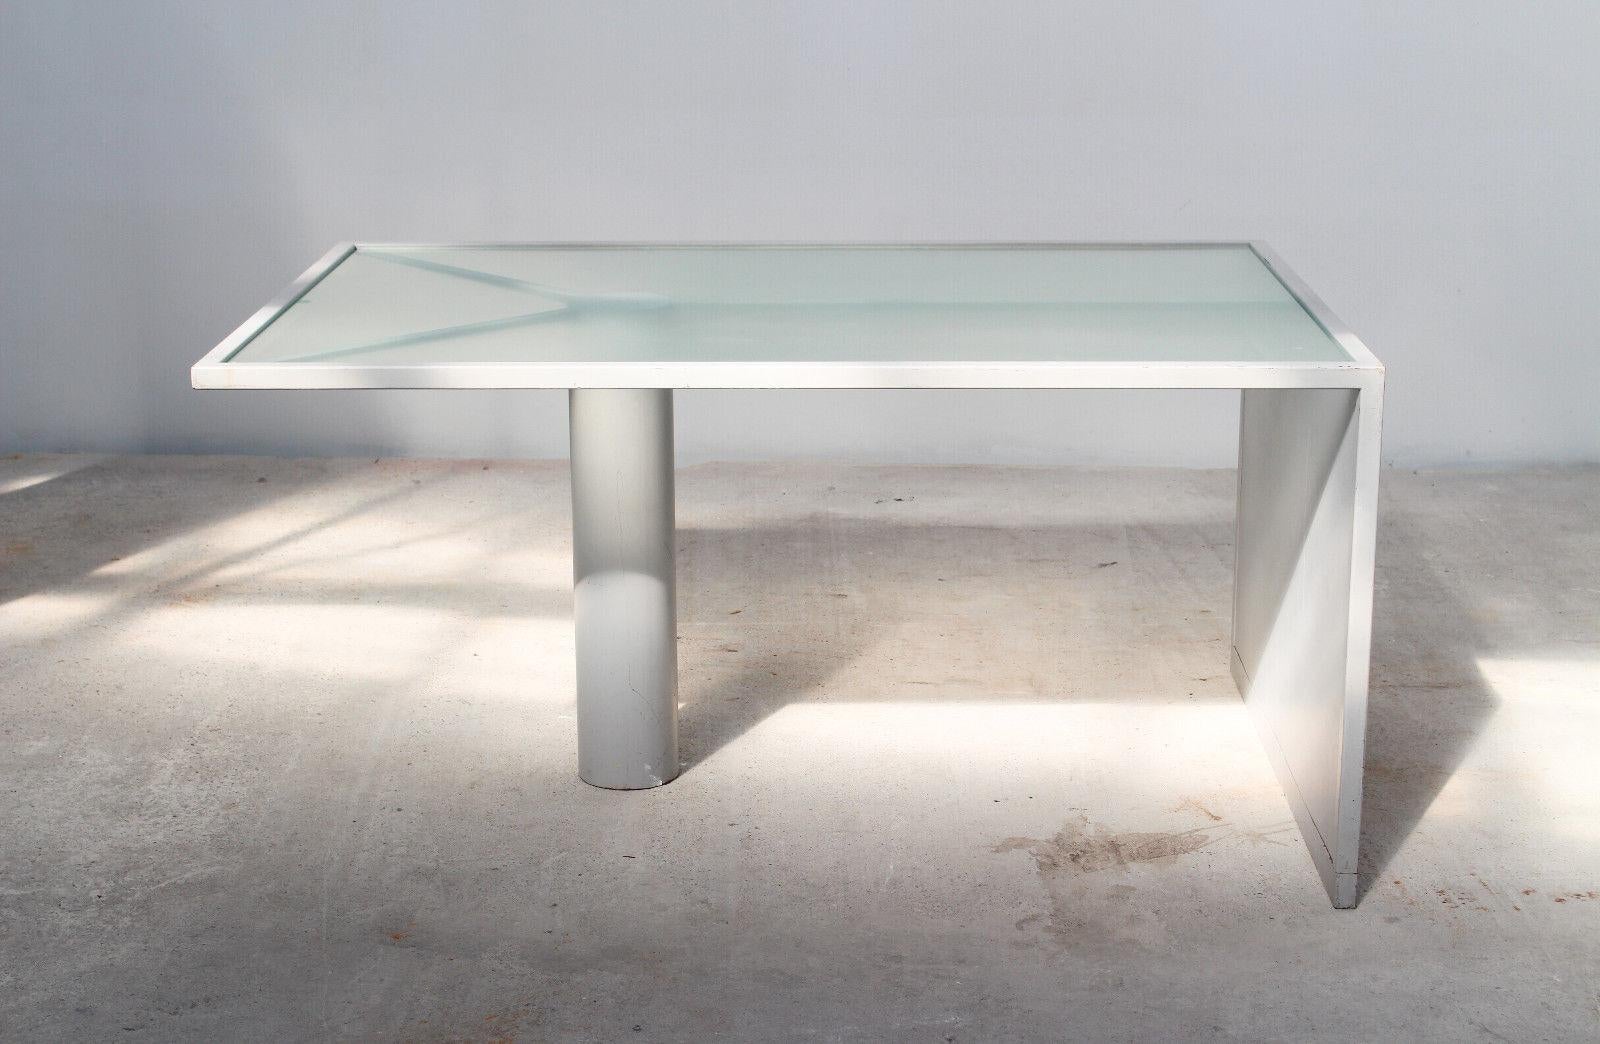 The desk of Jean Nouvel : CLM-BBDO
Glass Saint Gobain
Editor : Unifor.